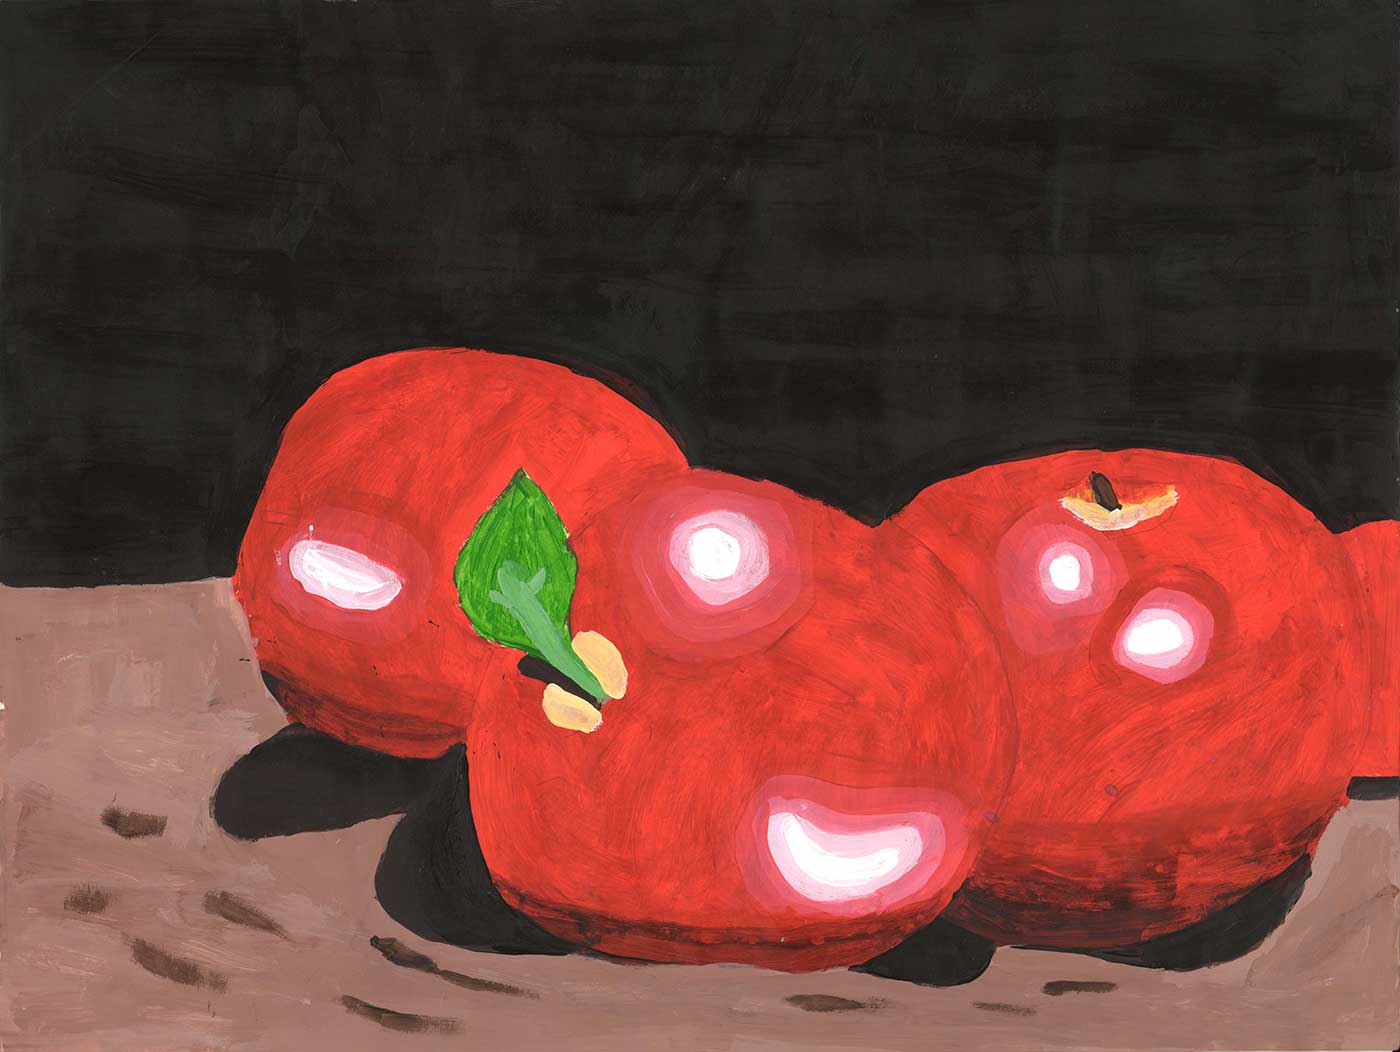 acrylic painting of three apples.